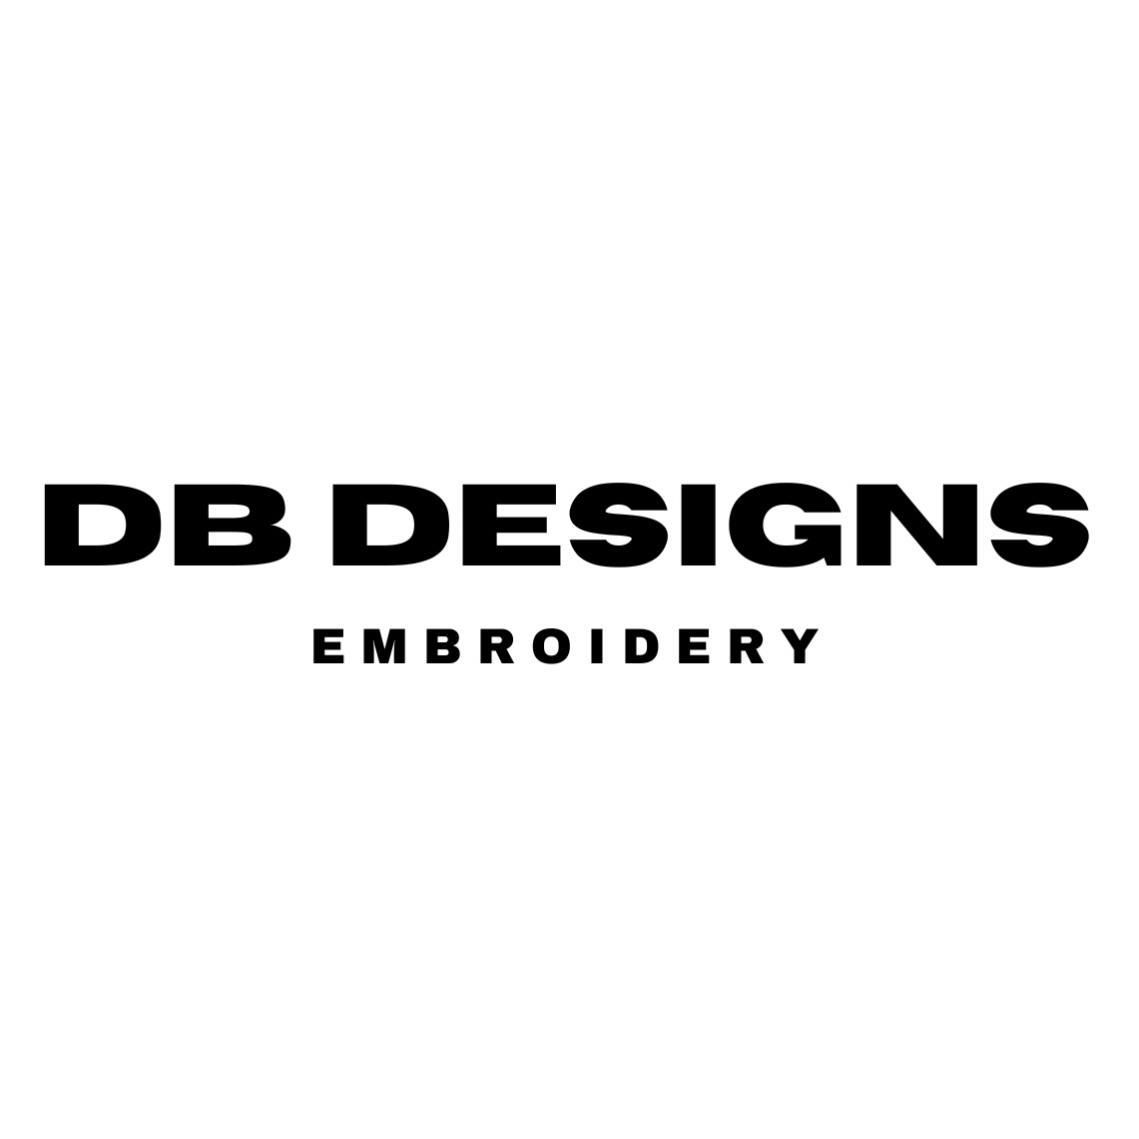 DB DESIGNS 's images